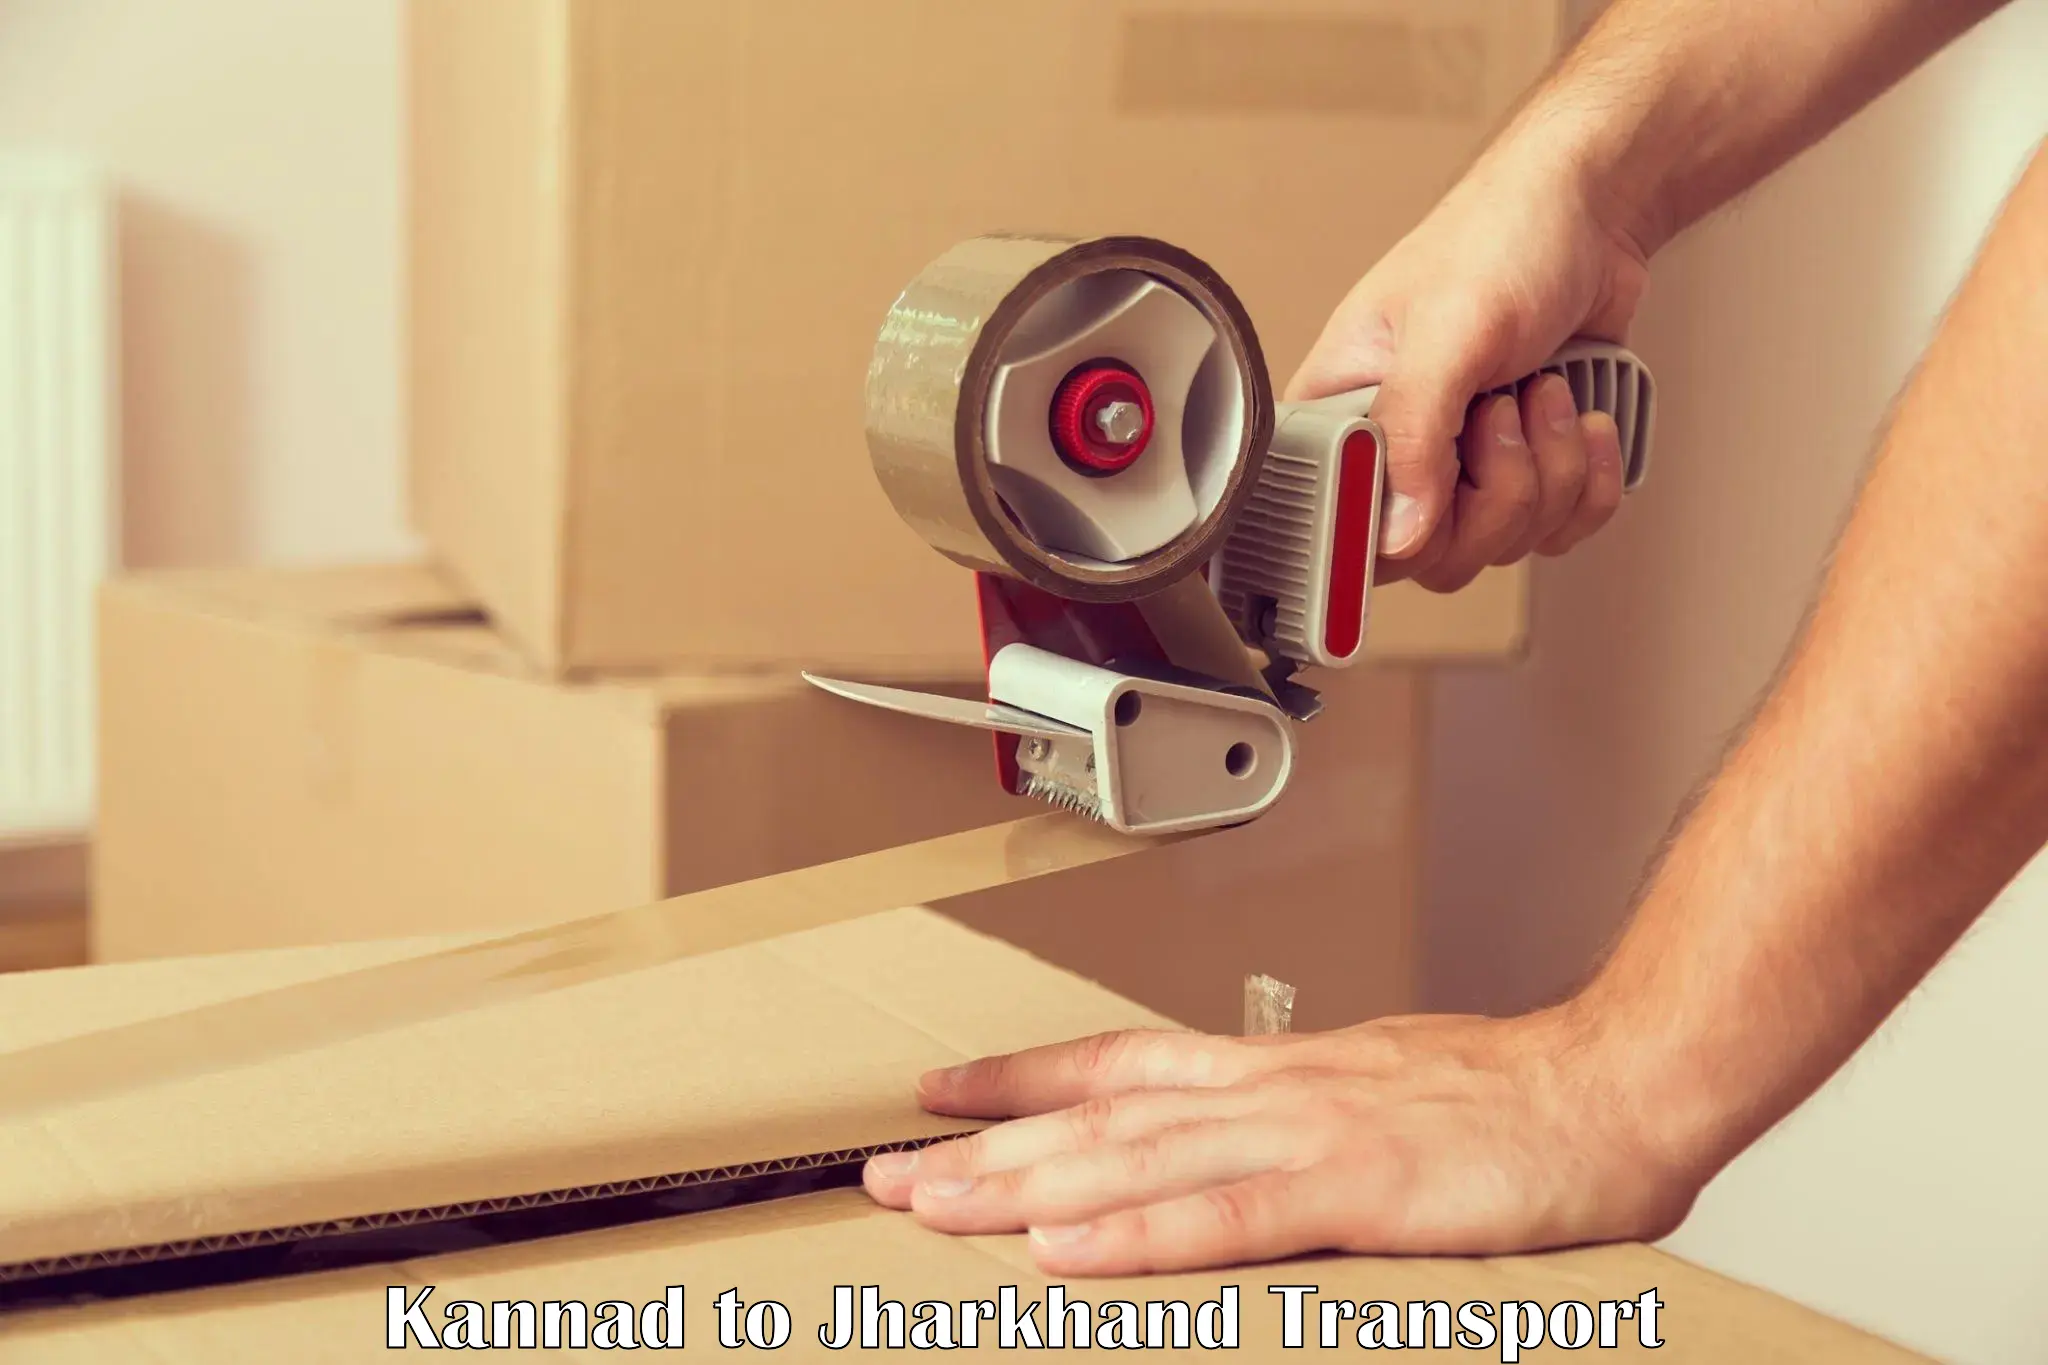 Shipping partner Kannad to Domchanch